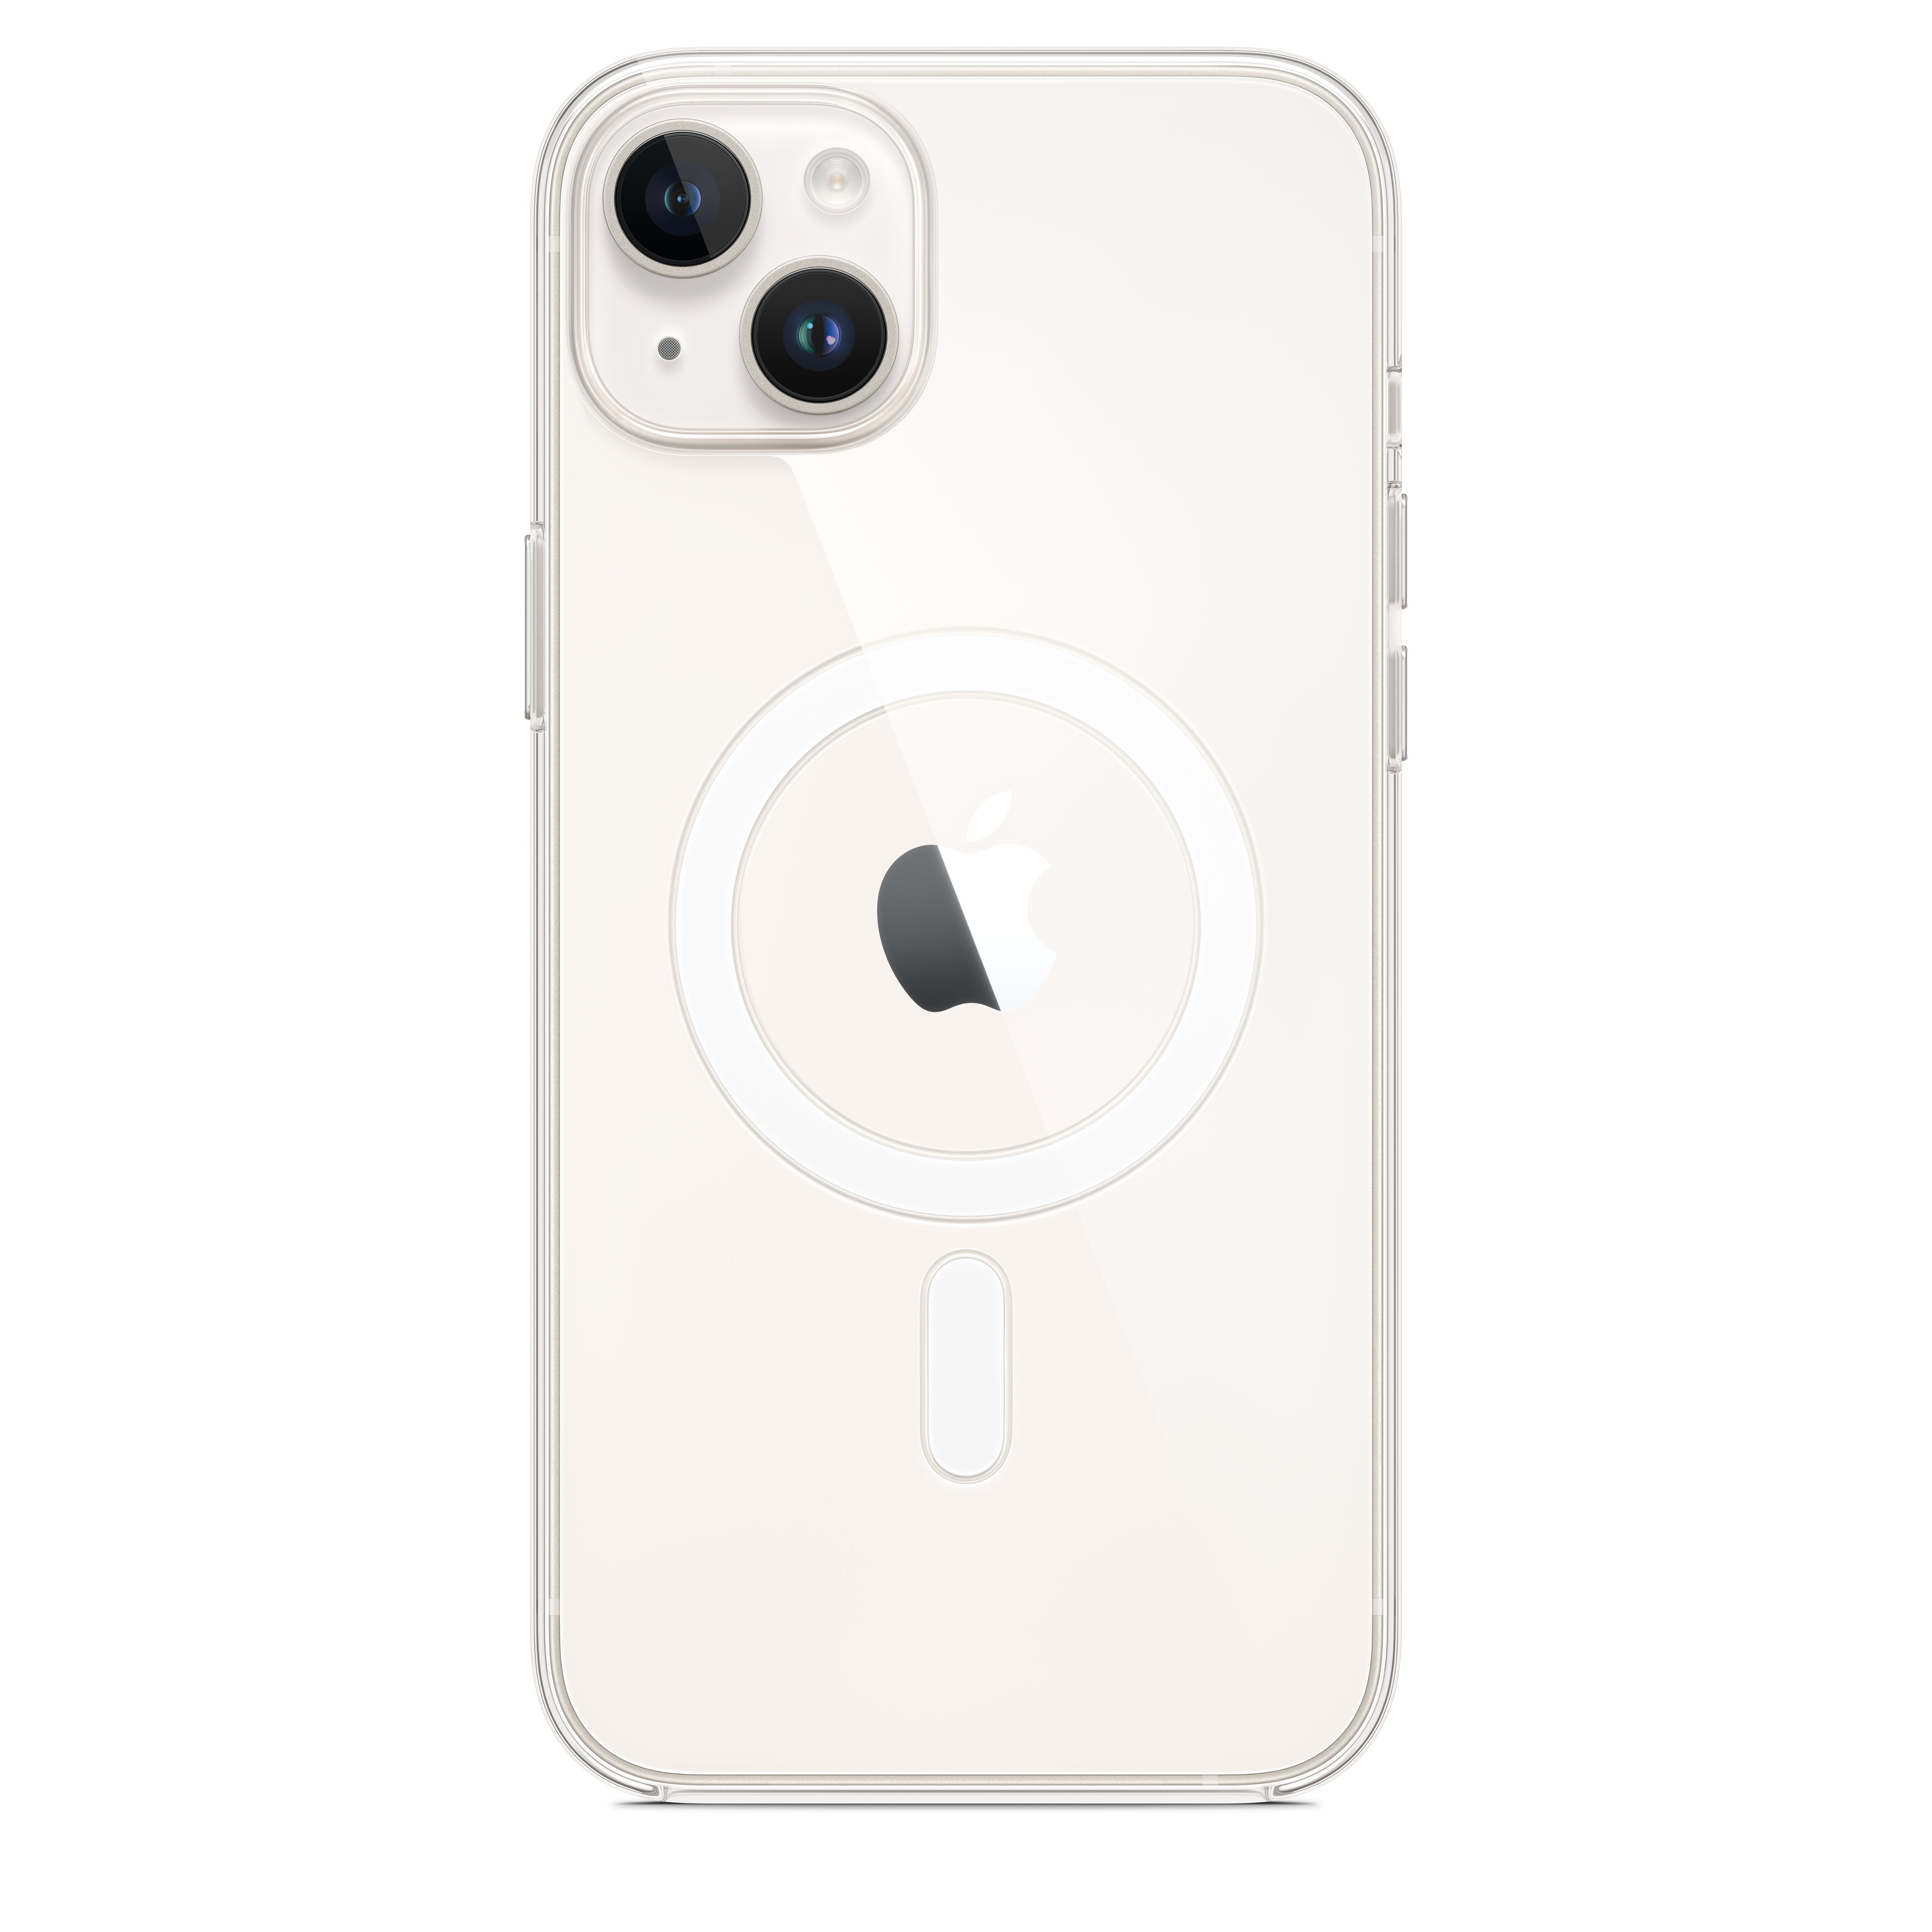 QDOS Hyrbid iPhone 15 Pro (Transparente) - Funda de teléfono - LDLC